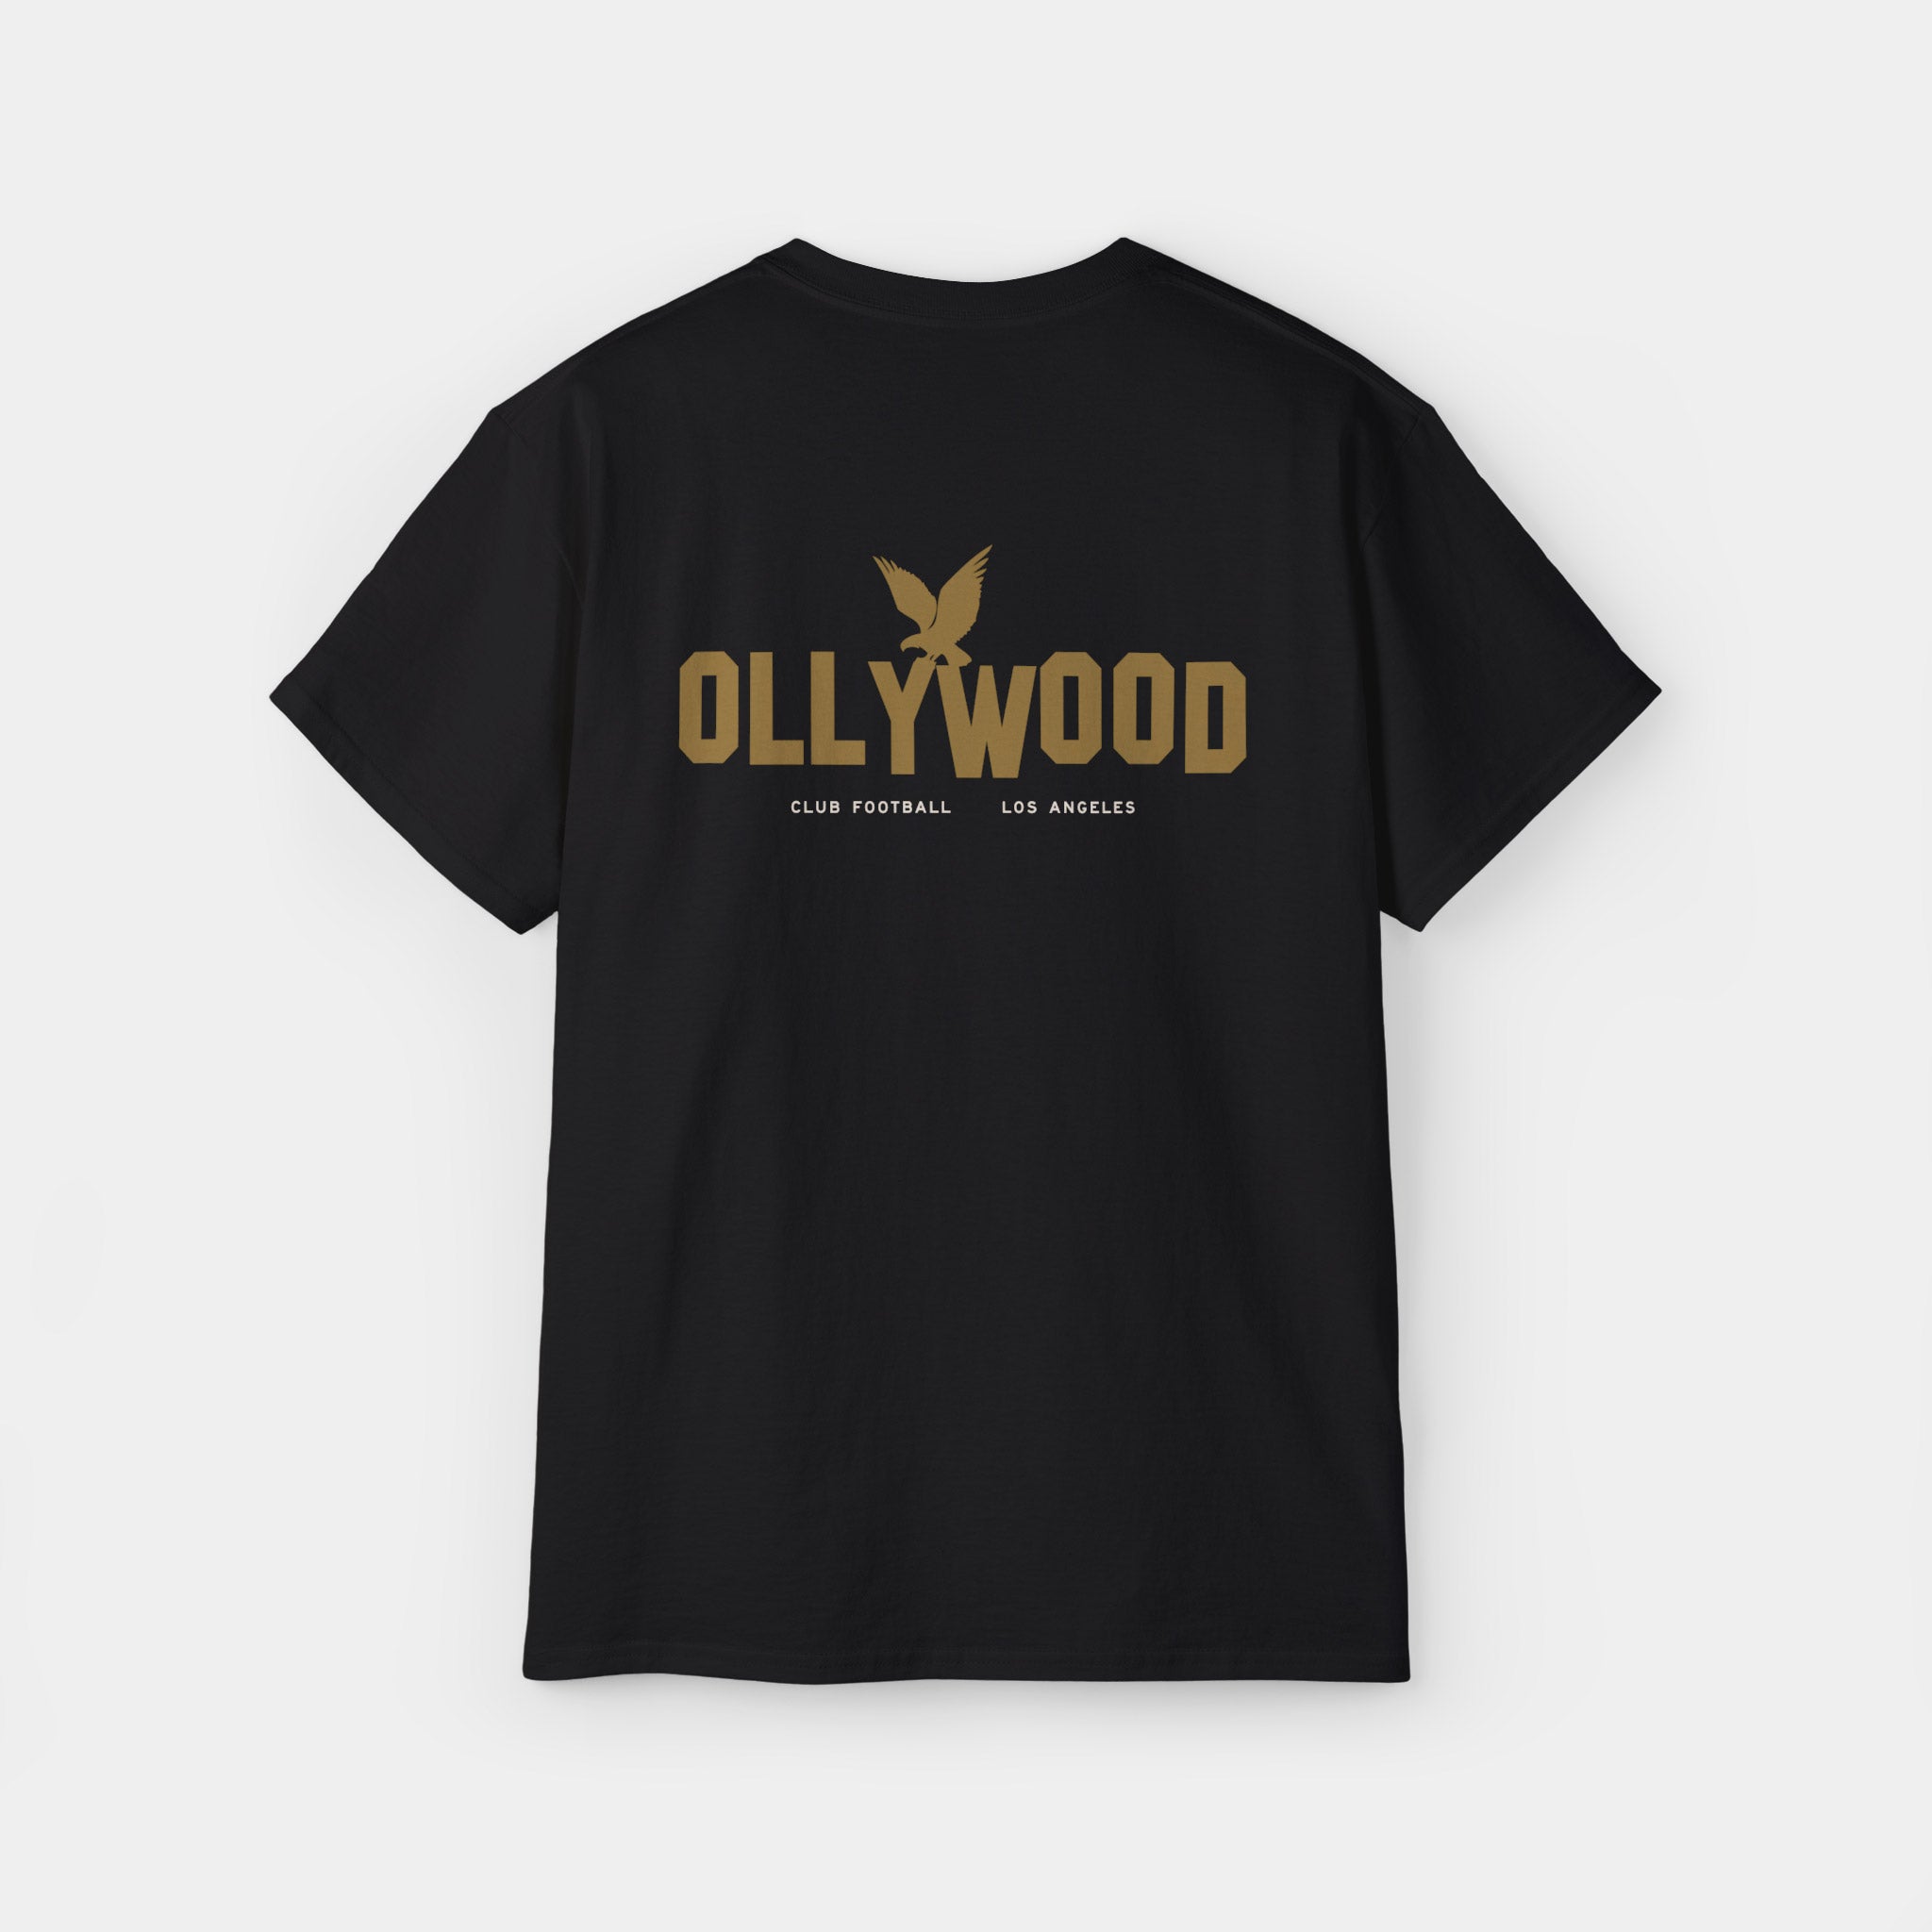 Ollywood (LAFC) T-shirt